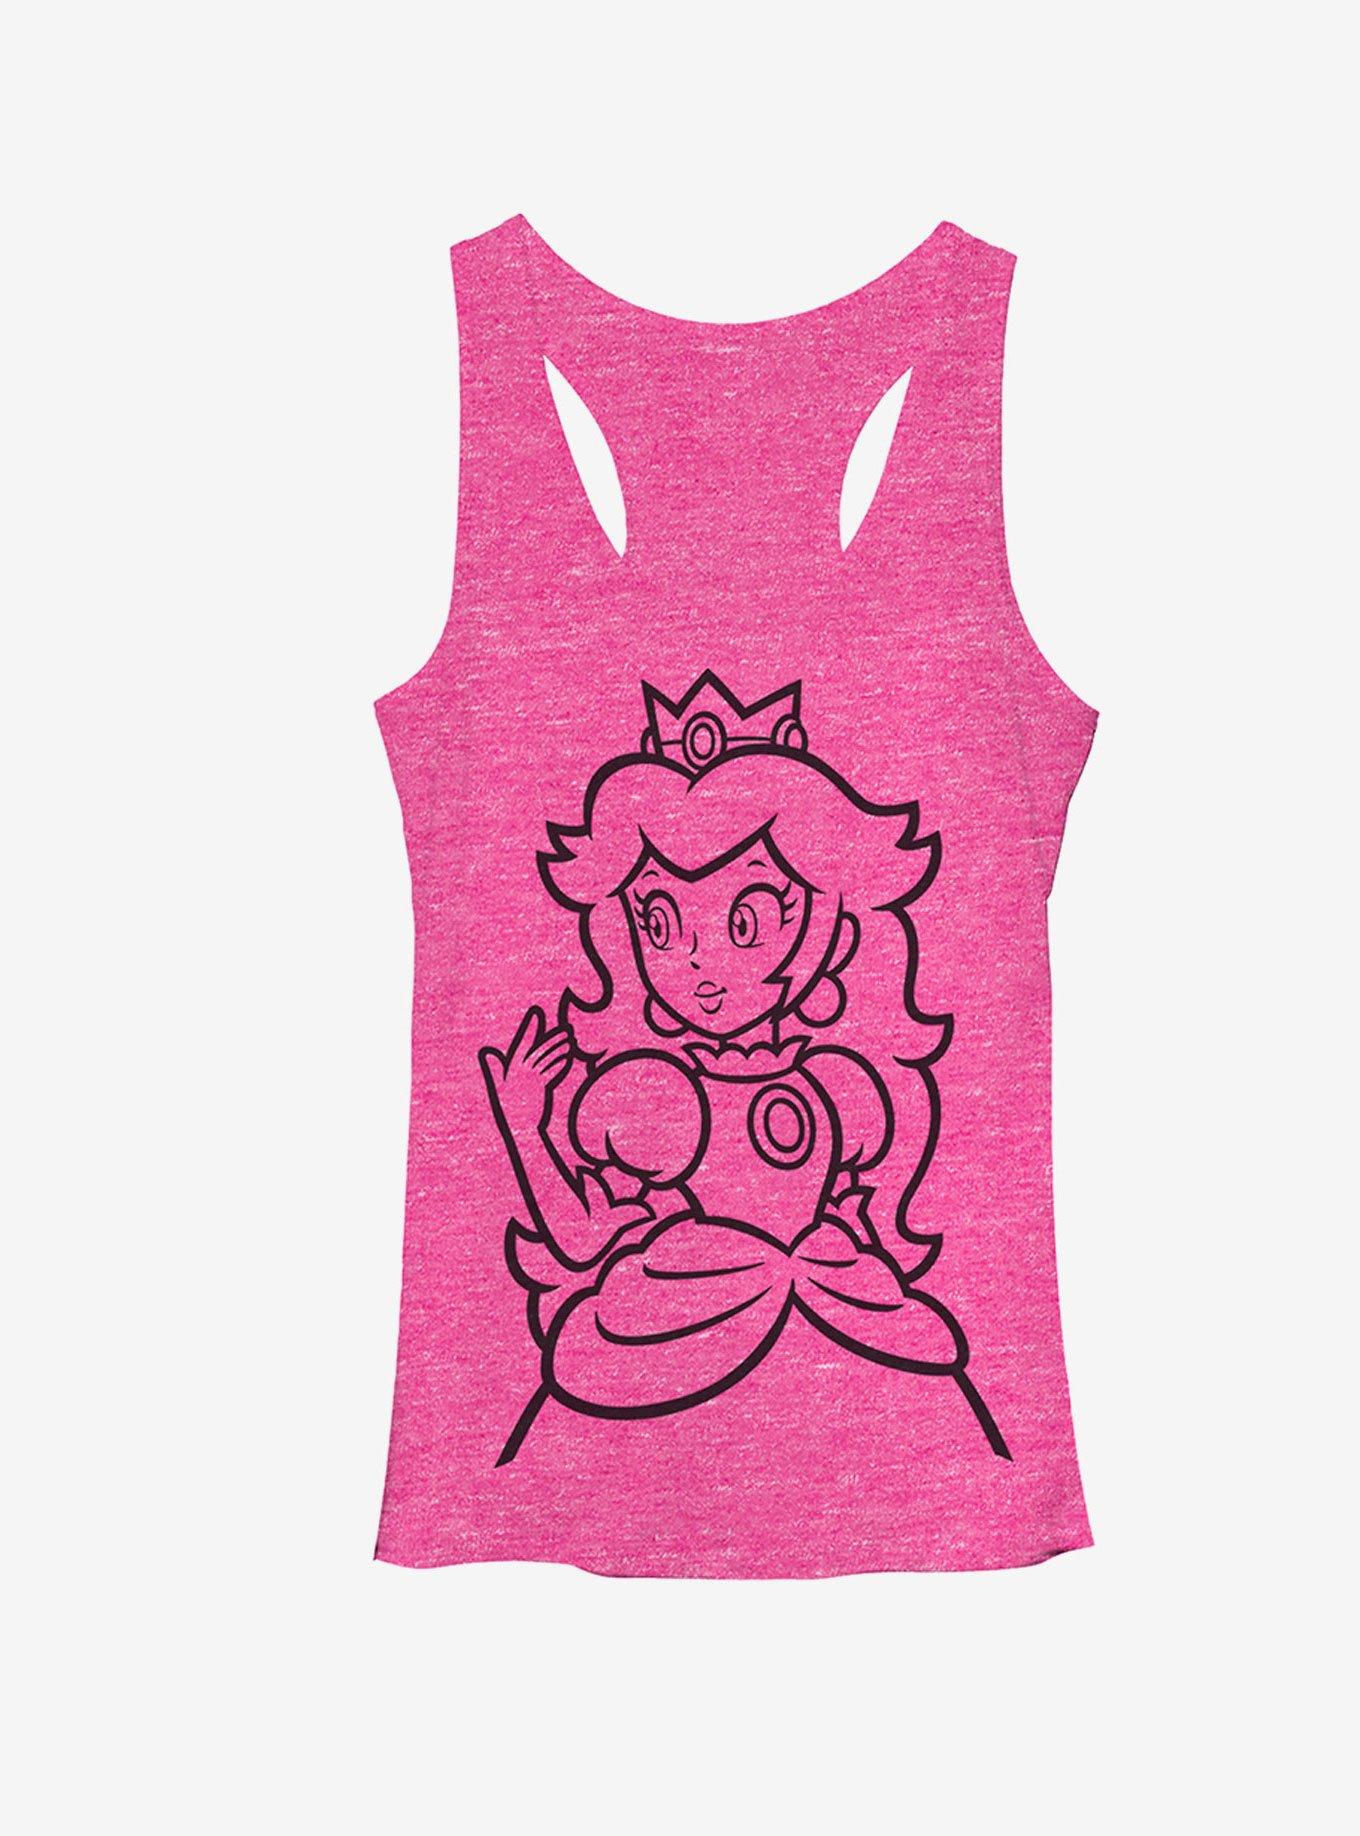 Nintendo Super Mario Bros. Princess Peach Womens Tank Top, , hi-res